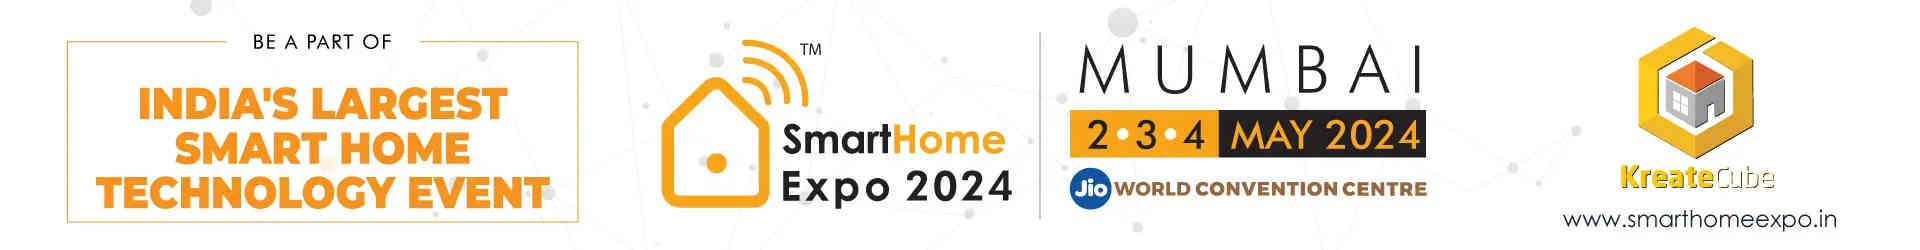 SmartHome Expo 2024 Mumbai